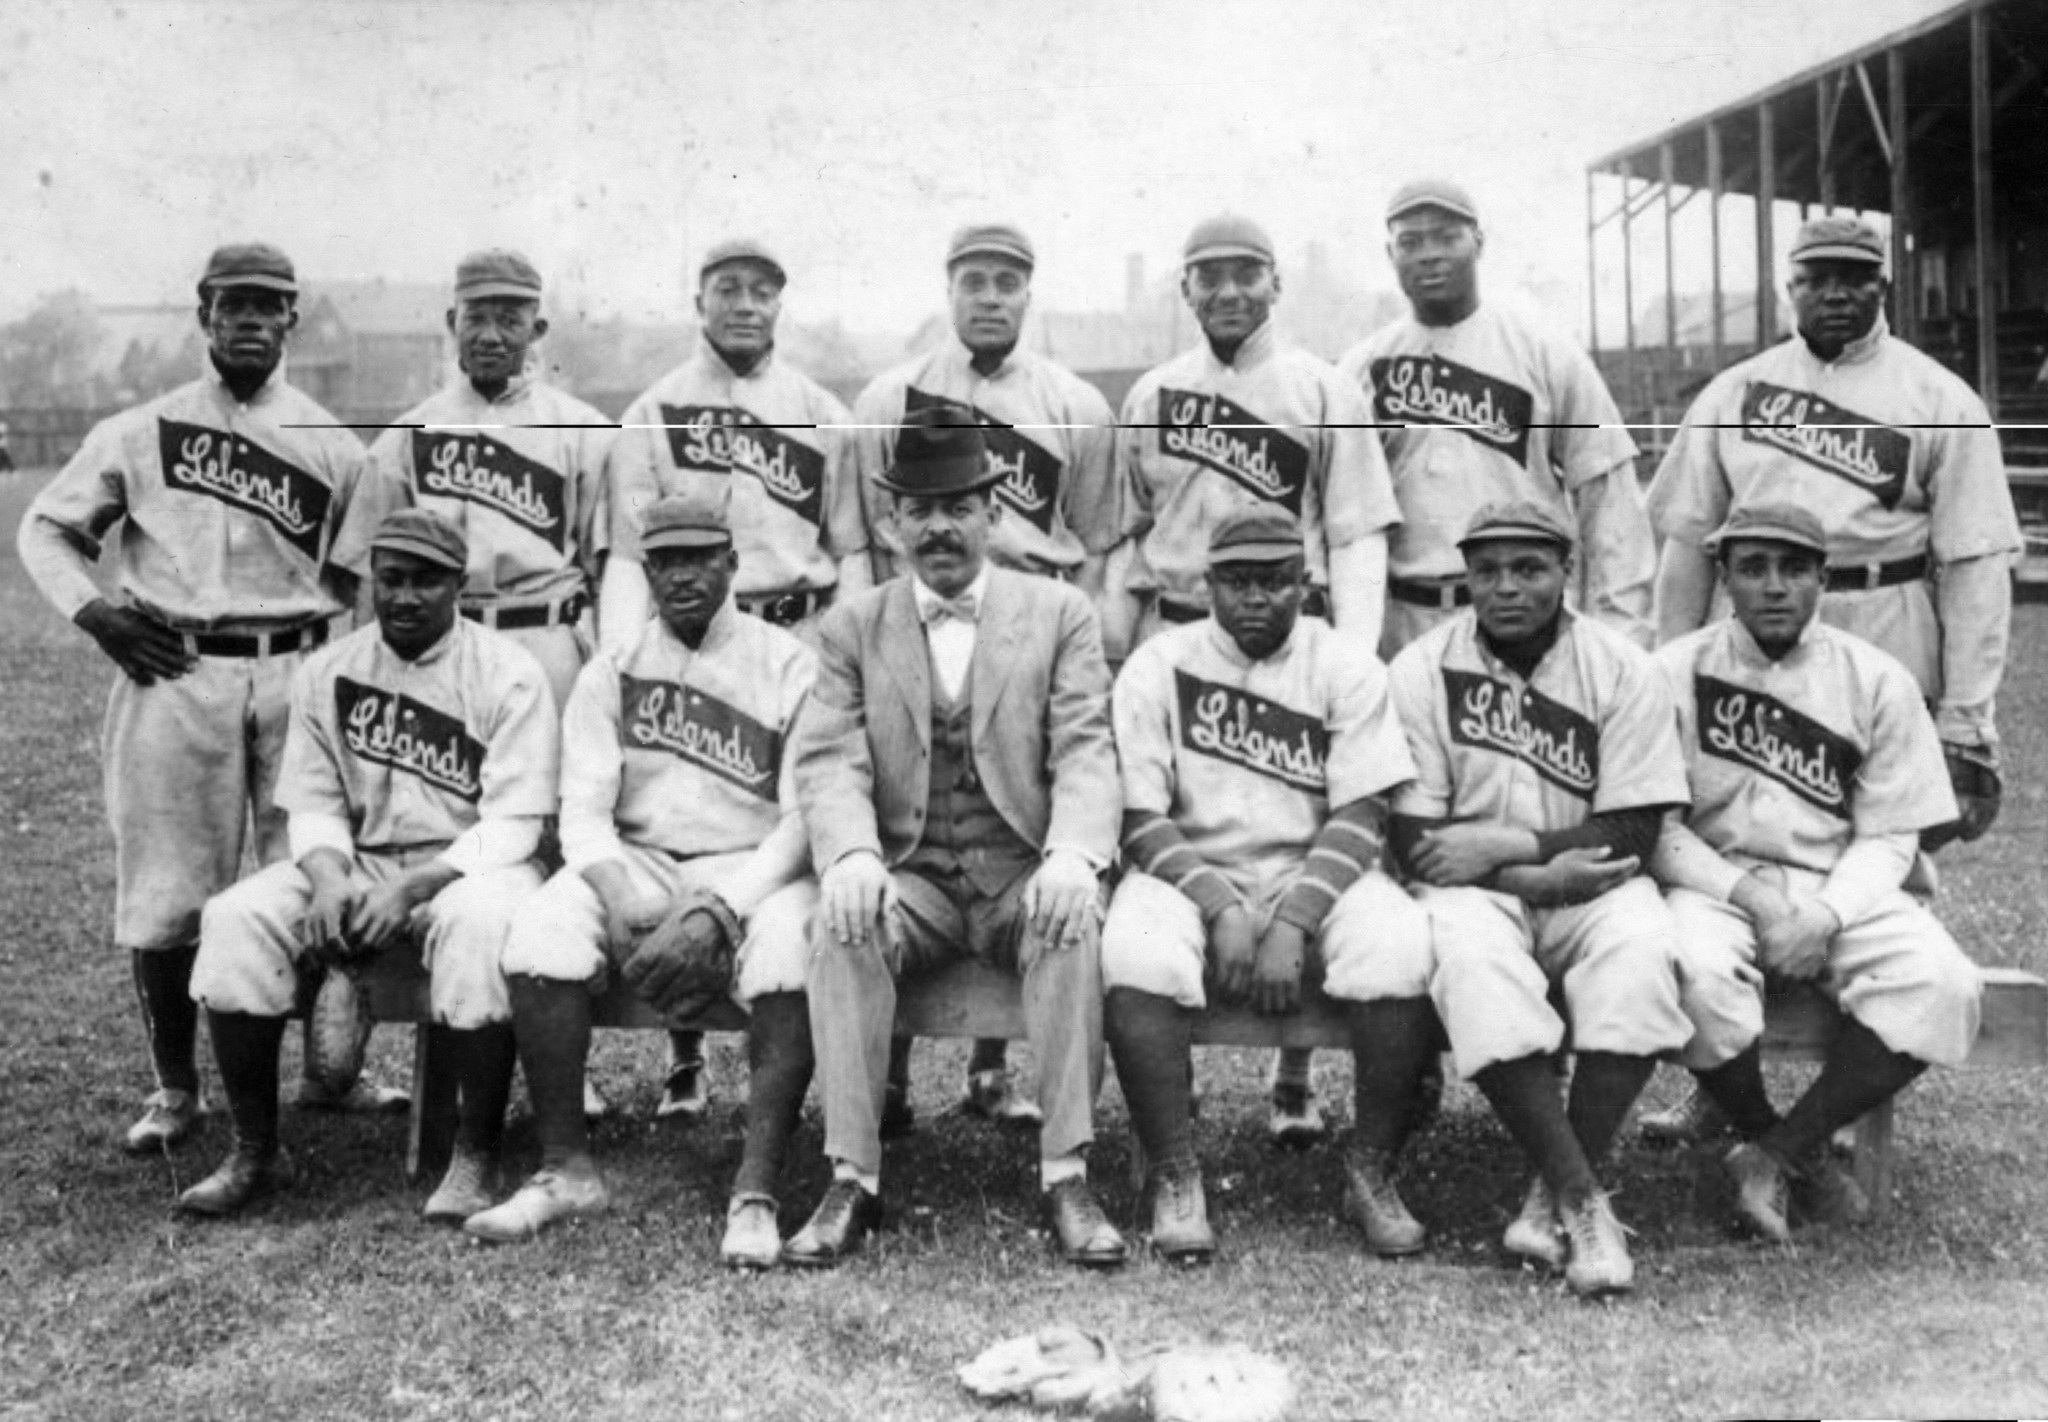 Chicago's Negro League